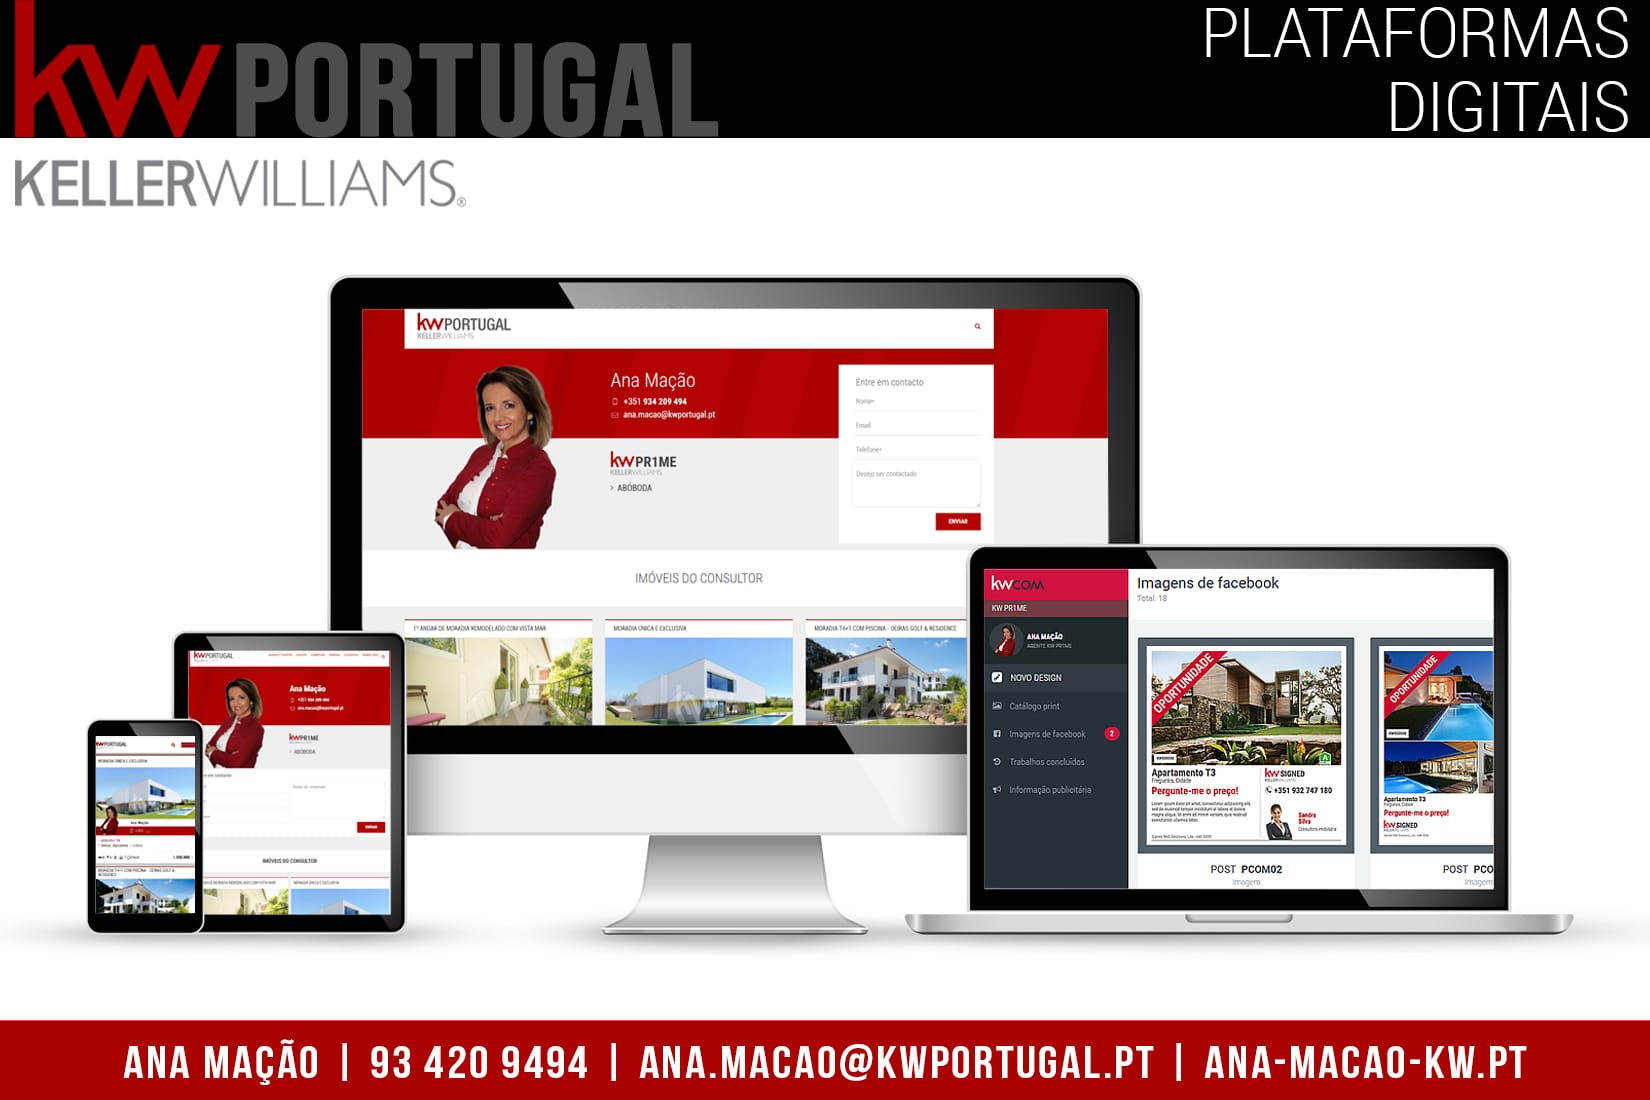 KW-Keller Williams - Digital platforms at the service of real estate in Portugal